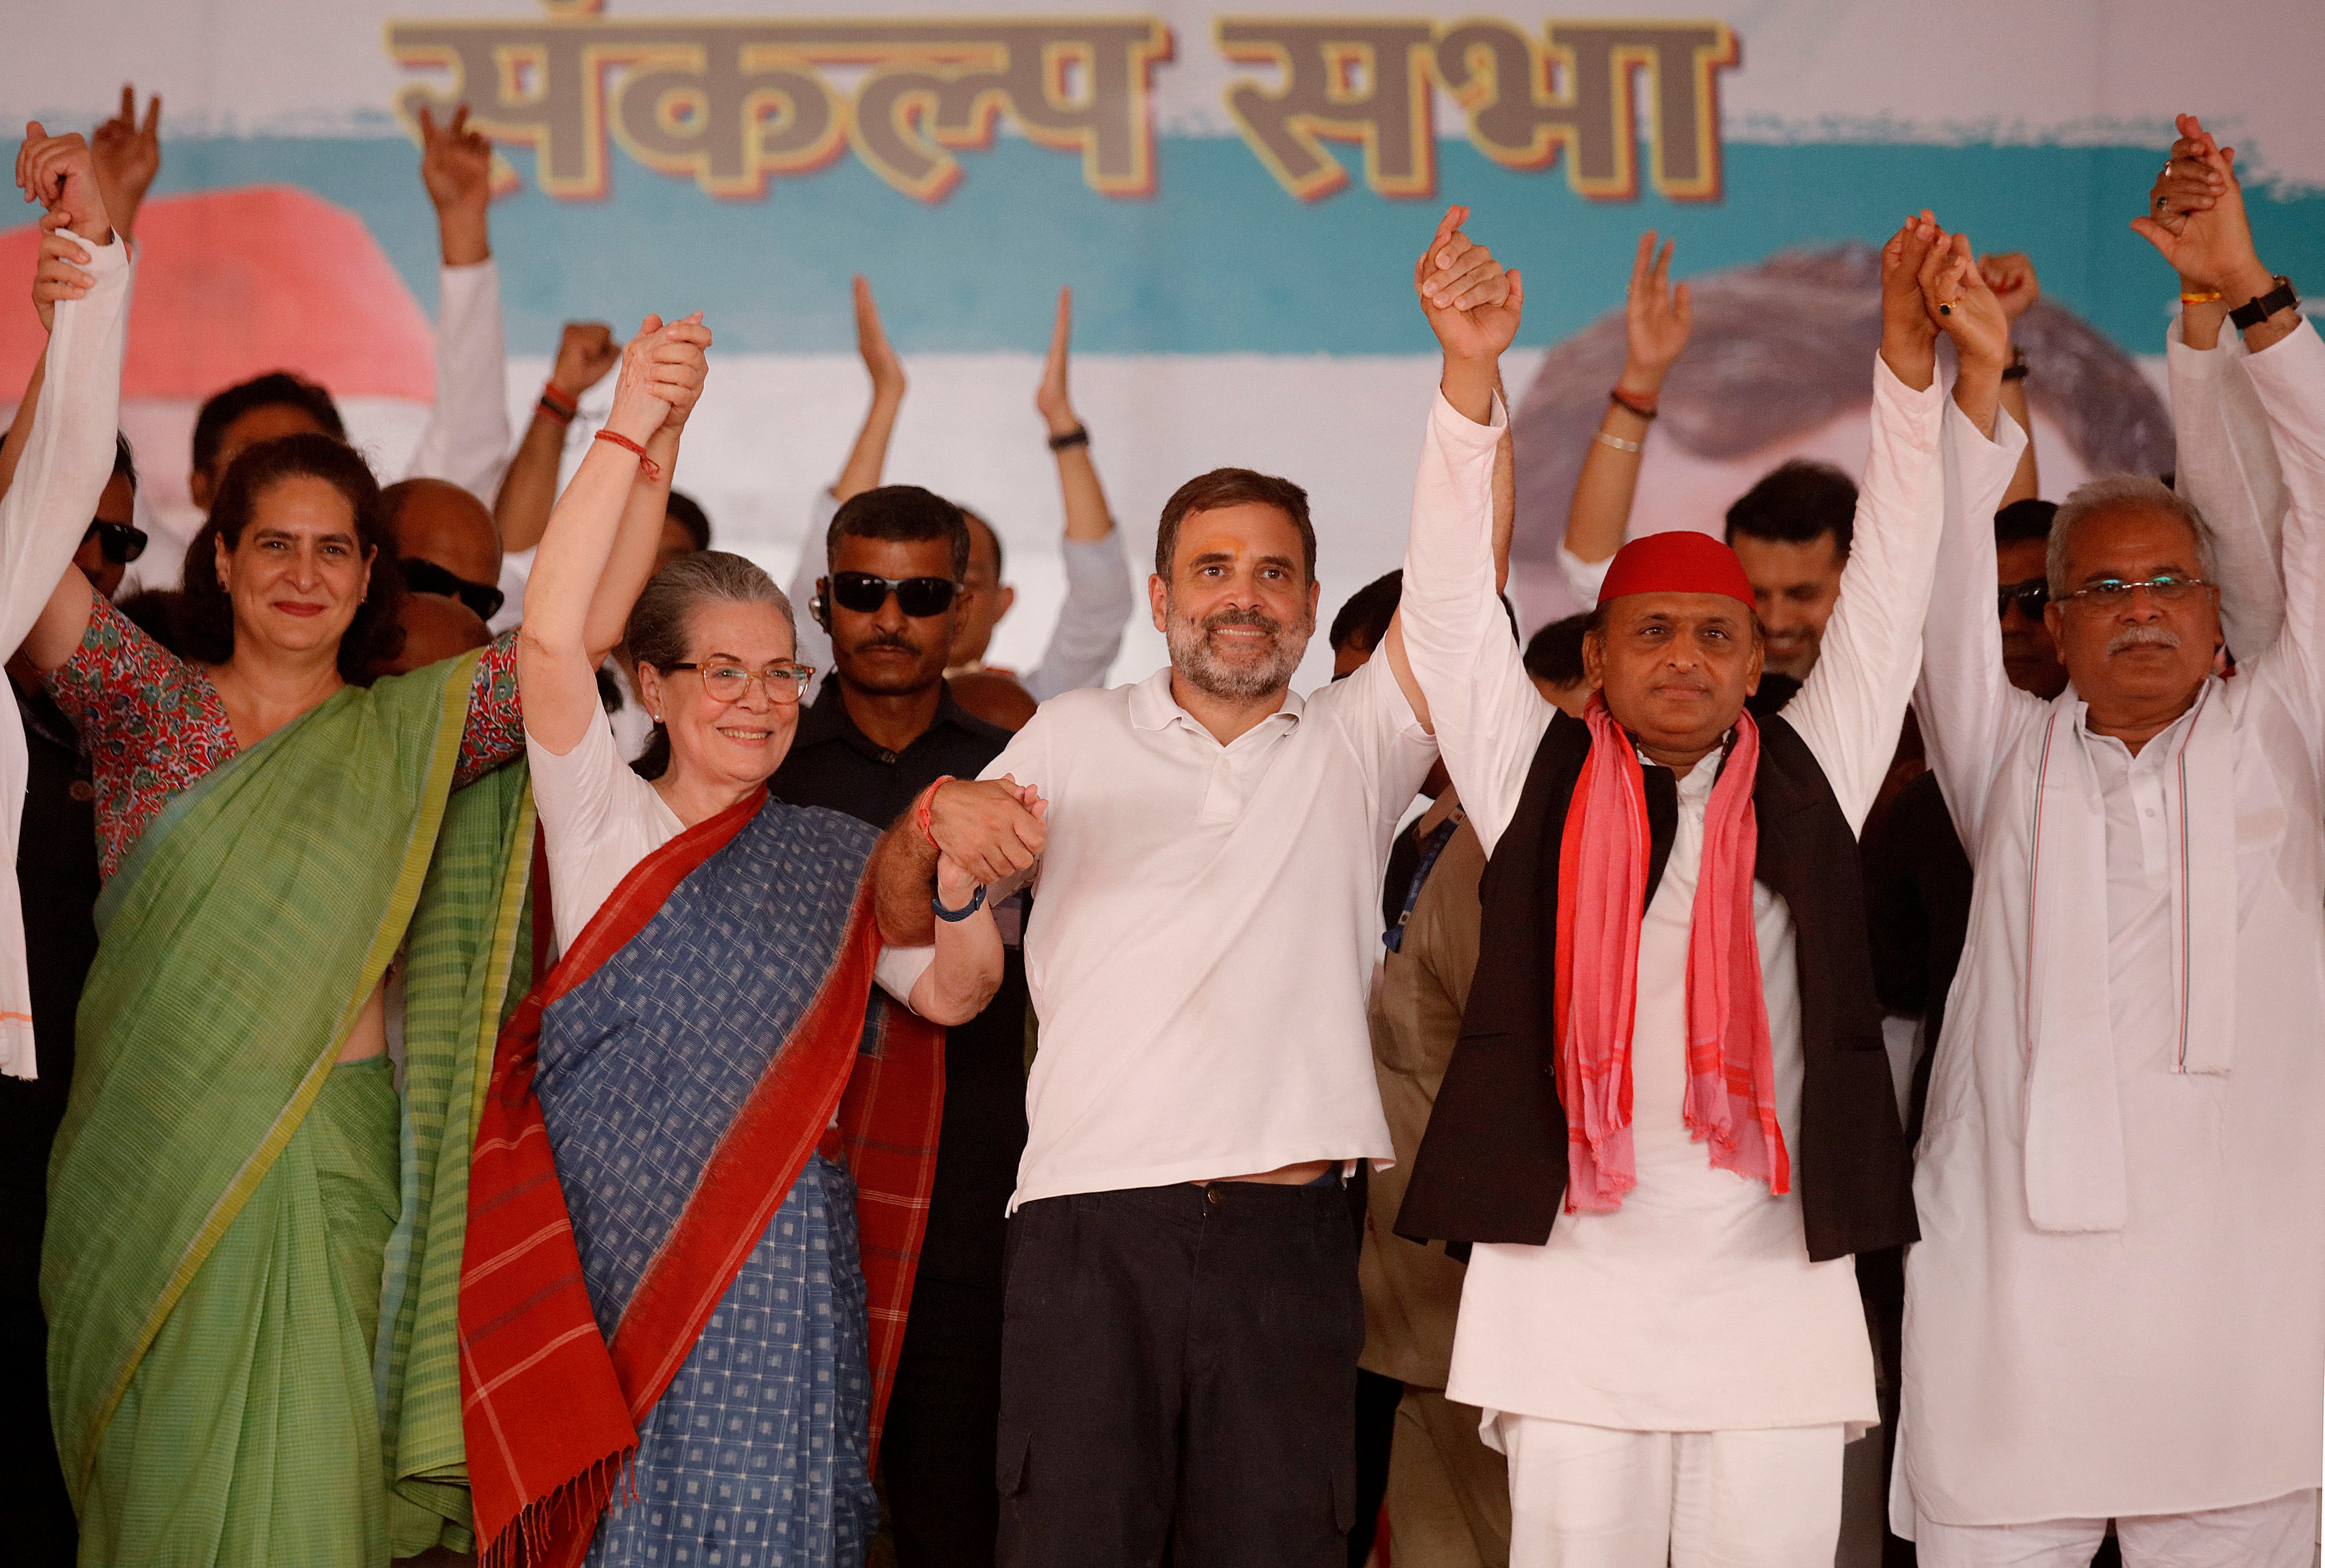 Priyanka, Rahul, Sonia, Bhupesh and Akhilesh join their hands together during an election campaign rally in Raebareli